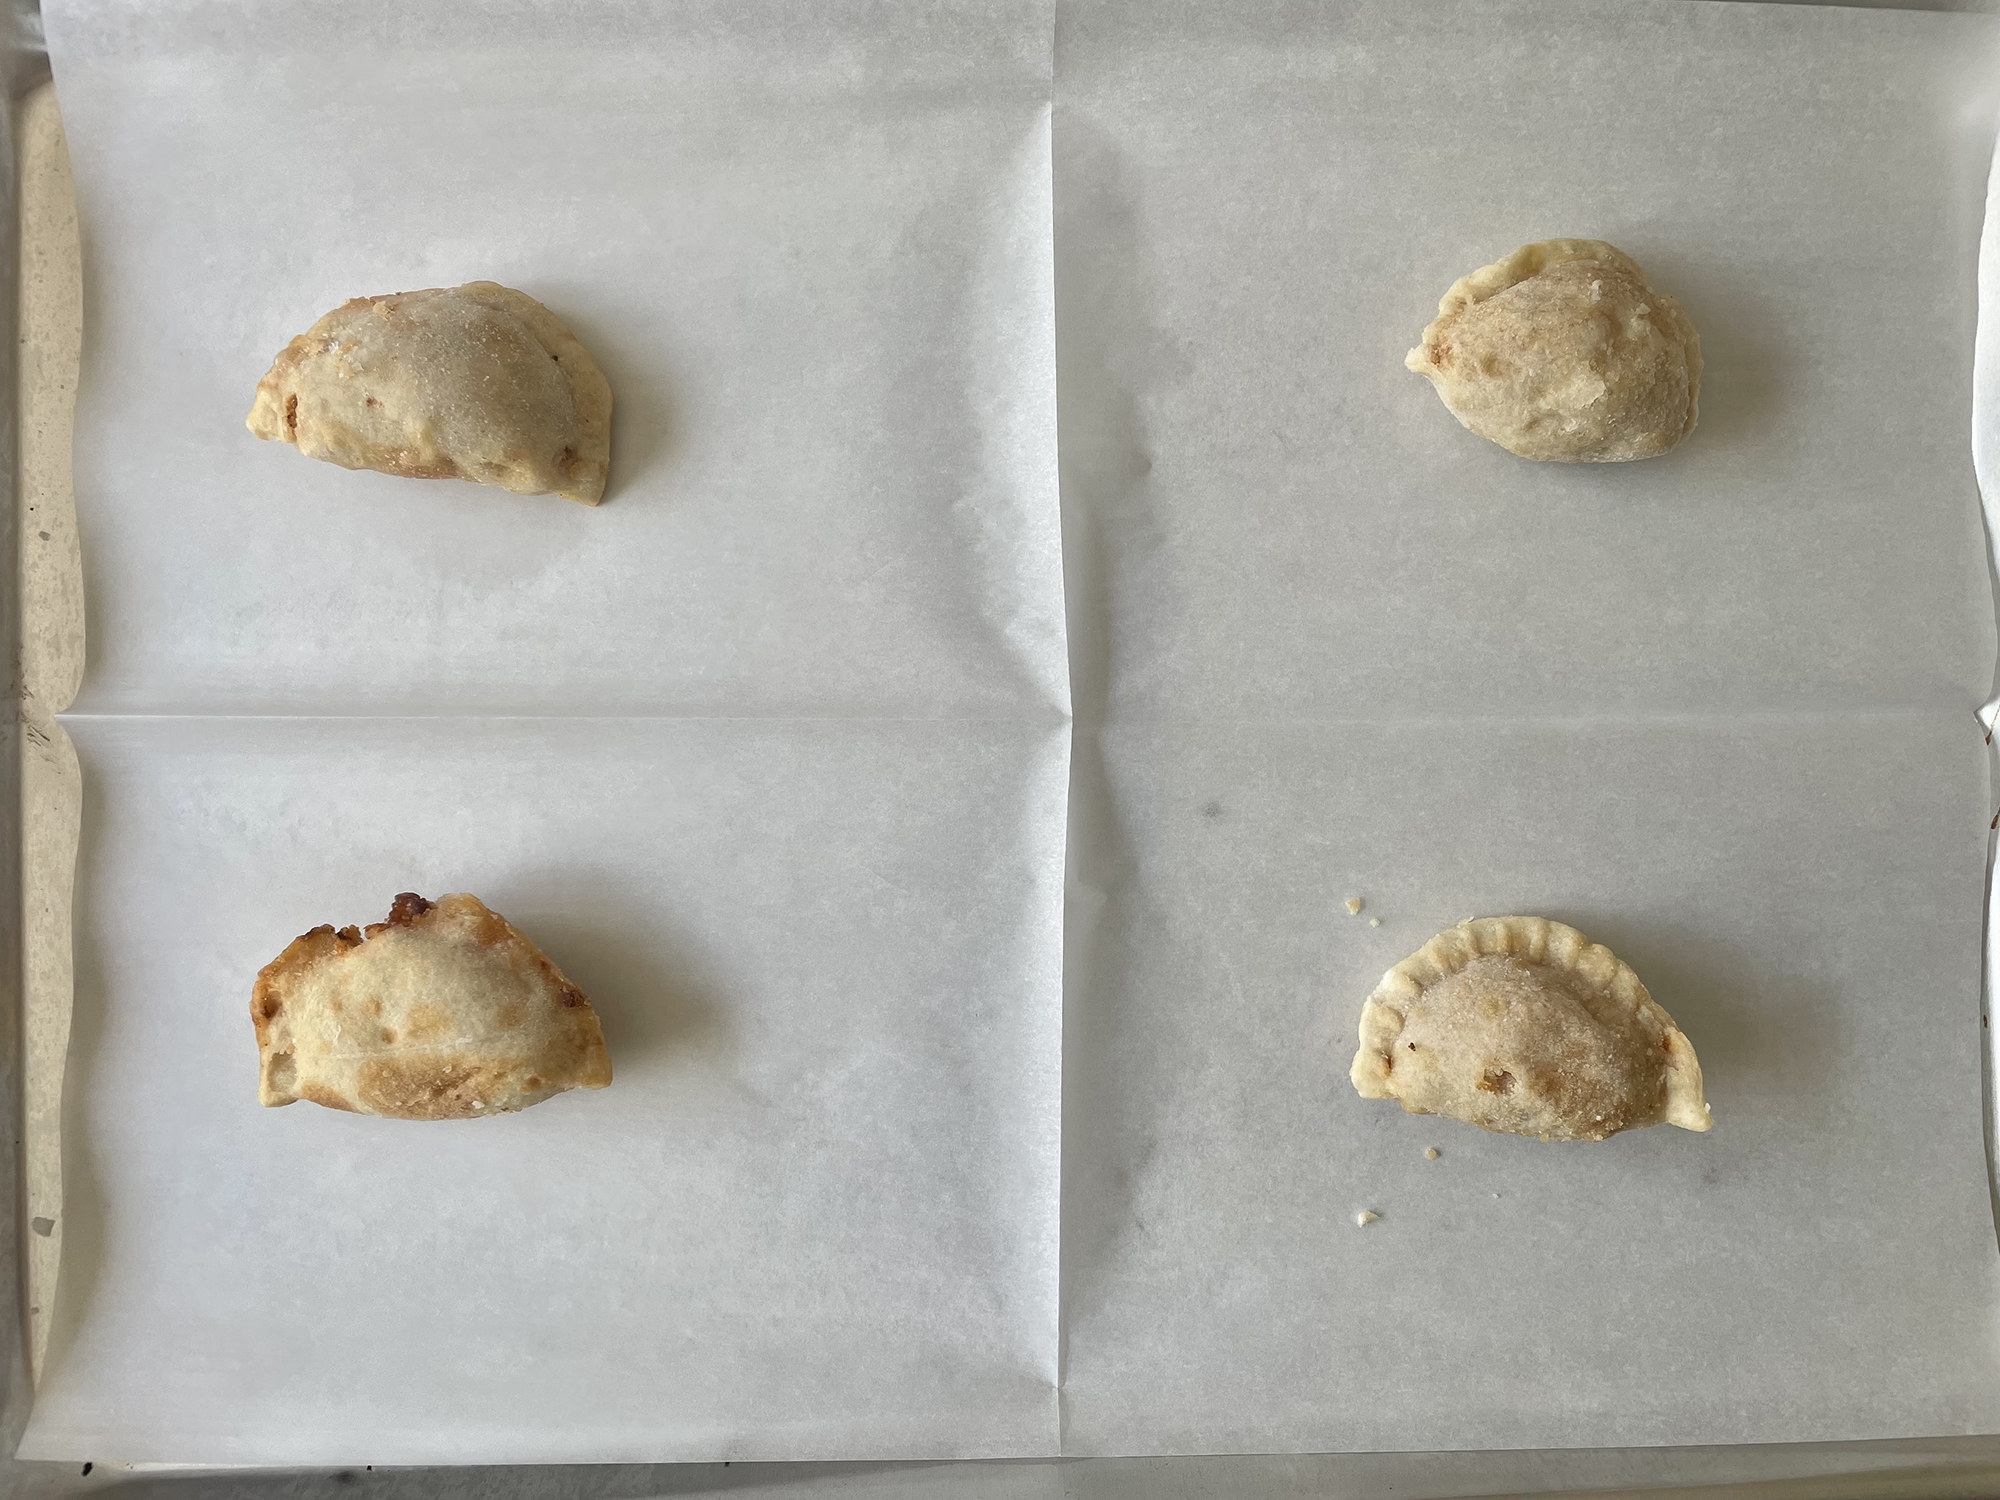 Uncooked empanadas on a baking sheet